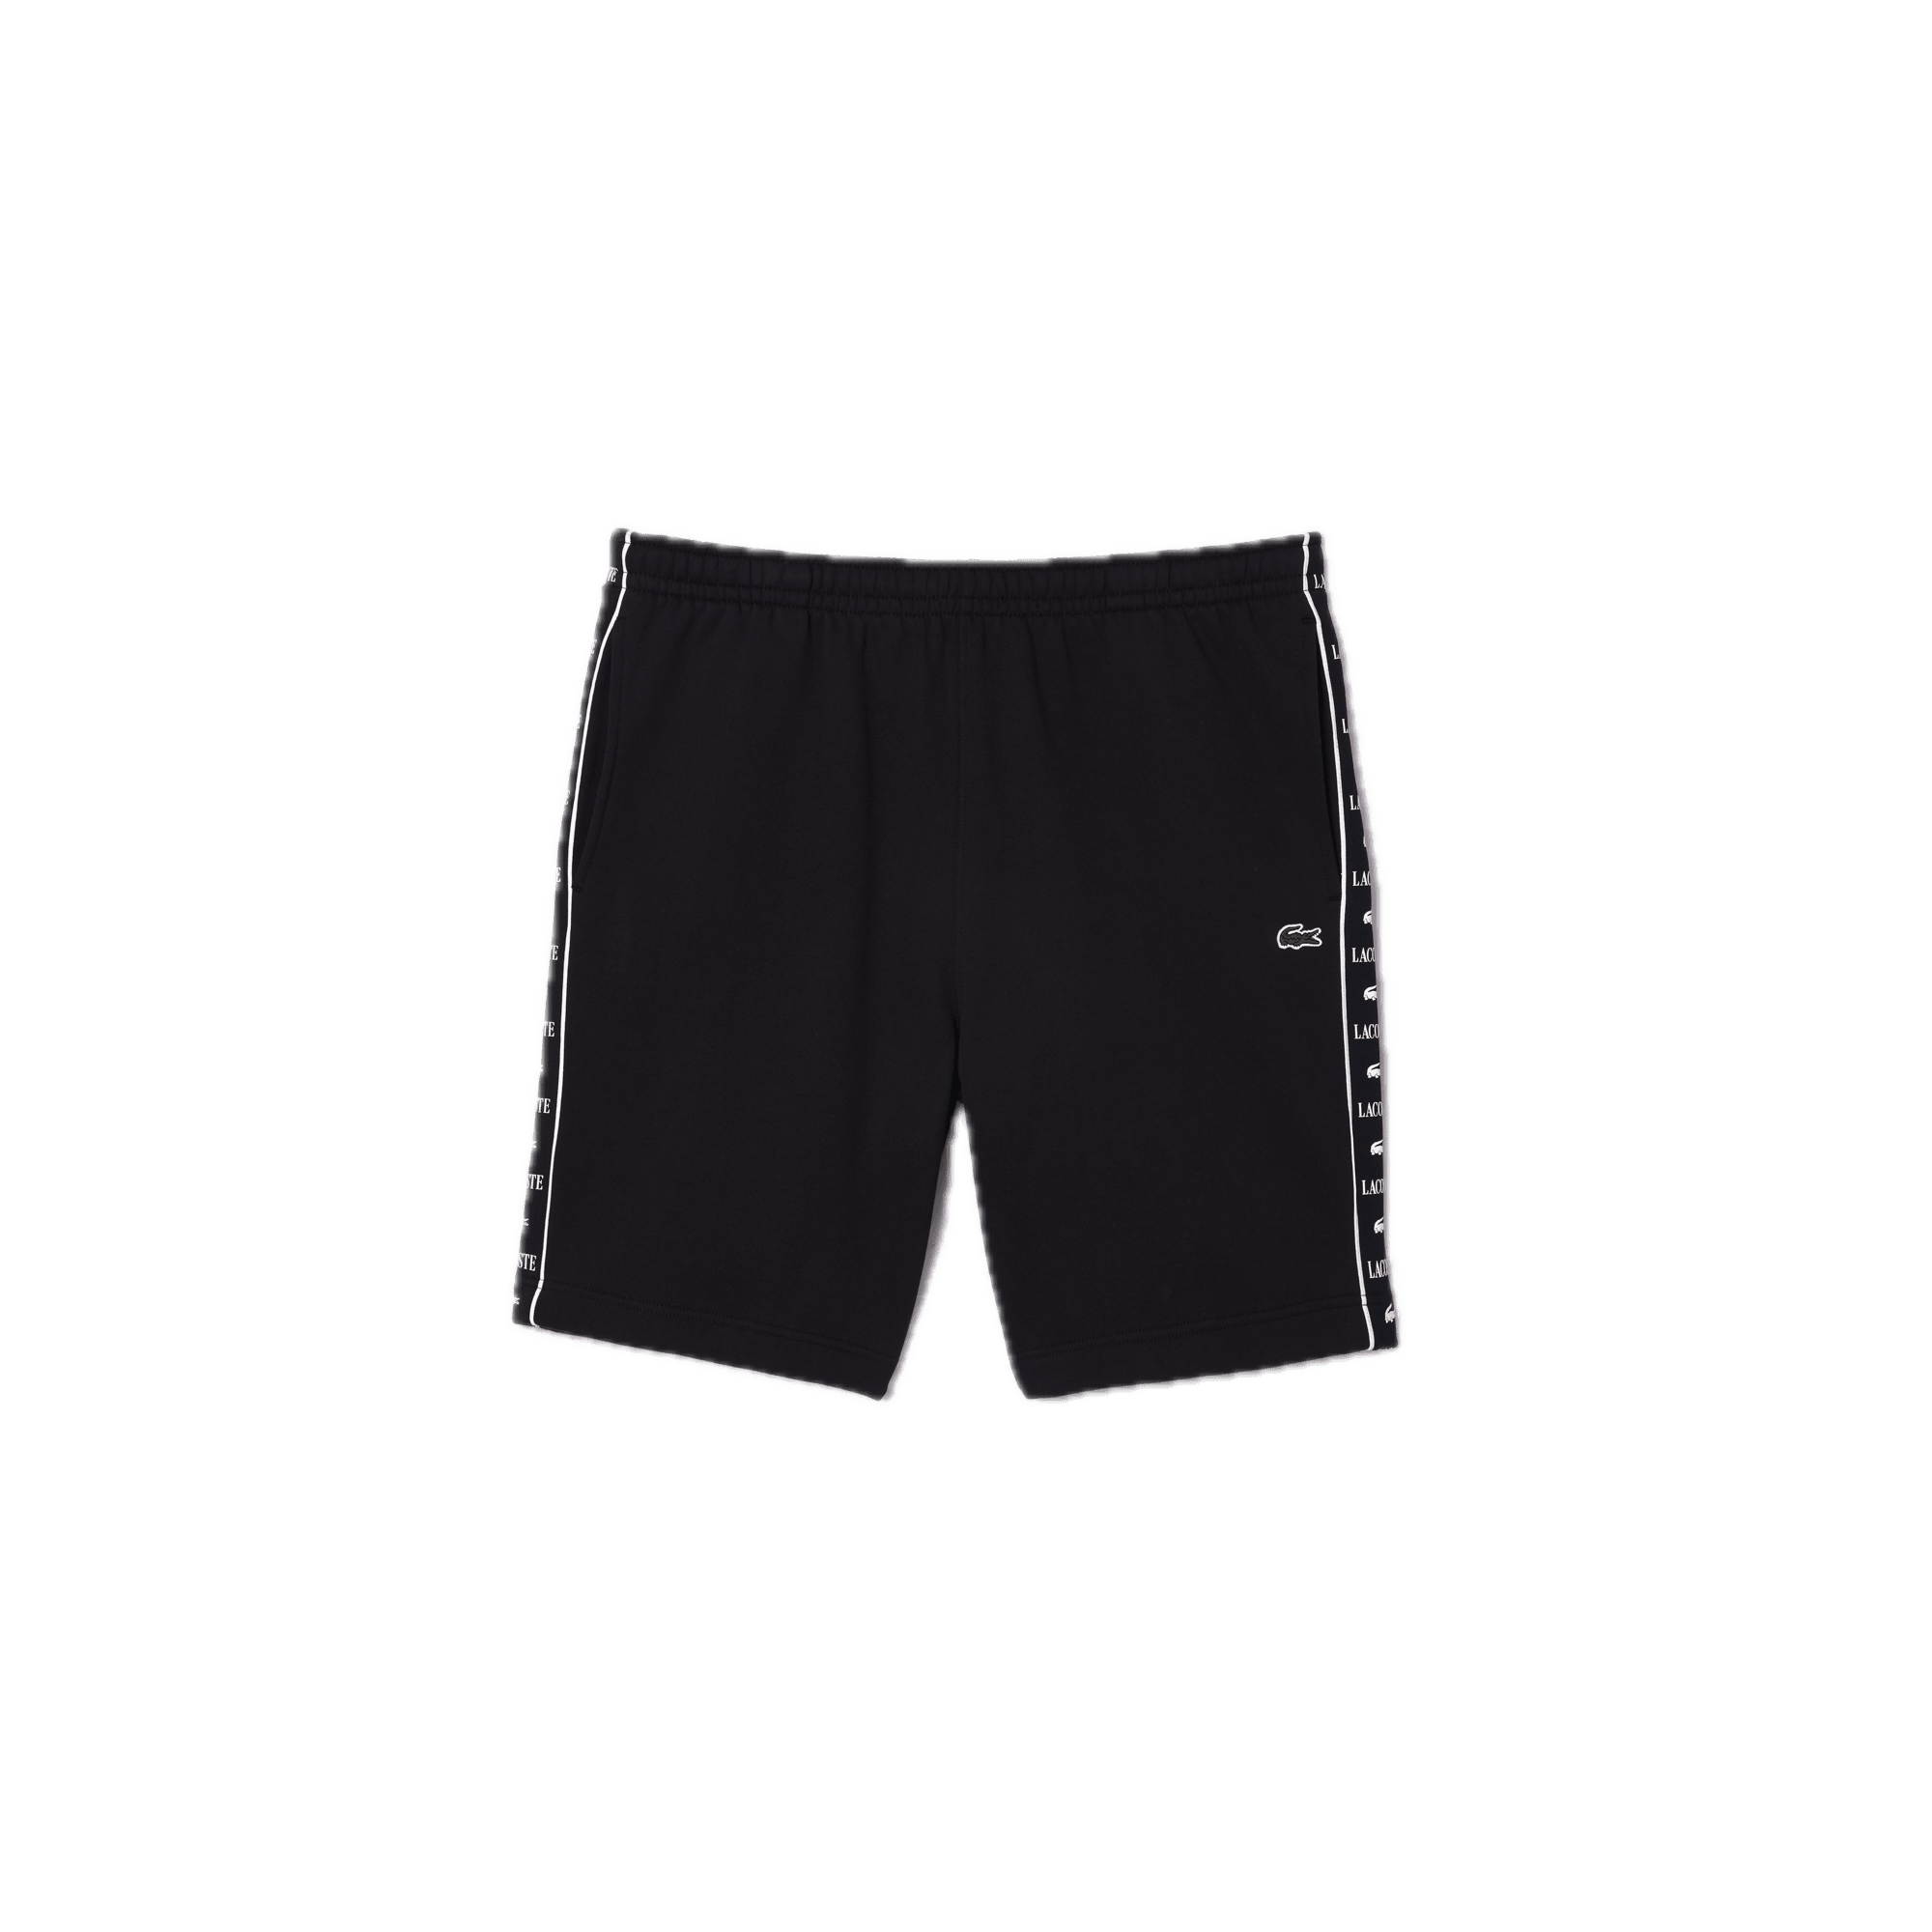 Pantalón corto de hombre Lacoste de felpa Negro - ECRU